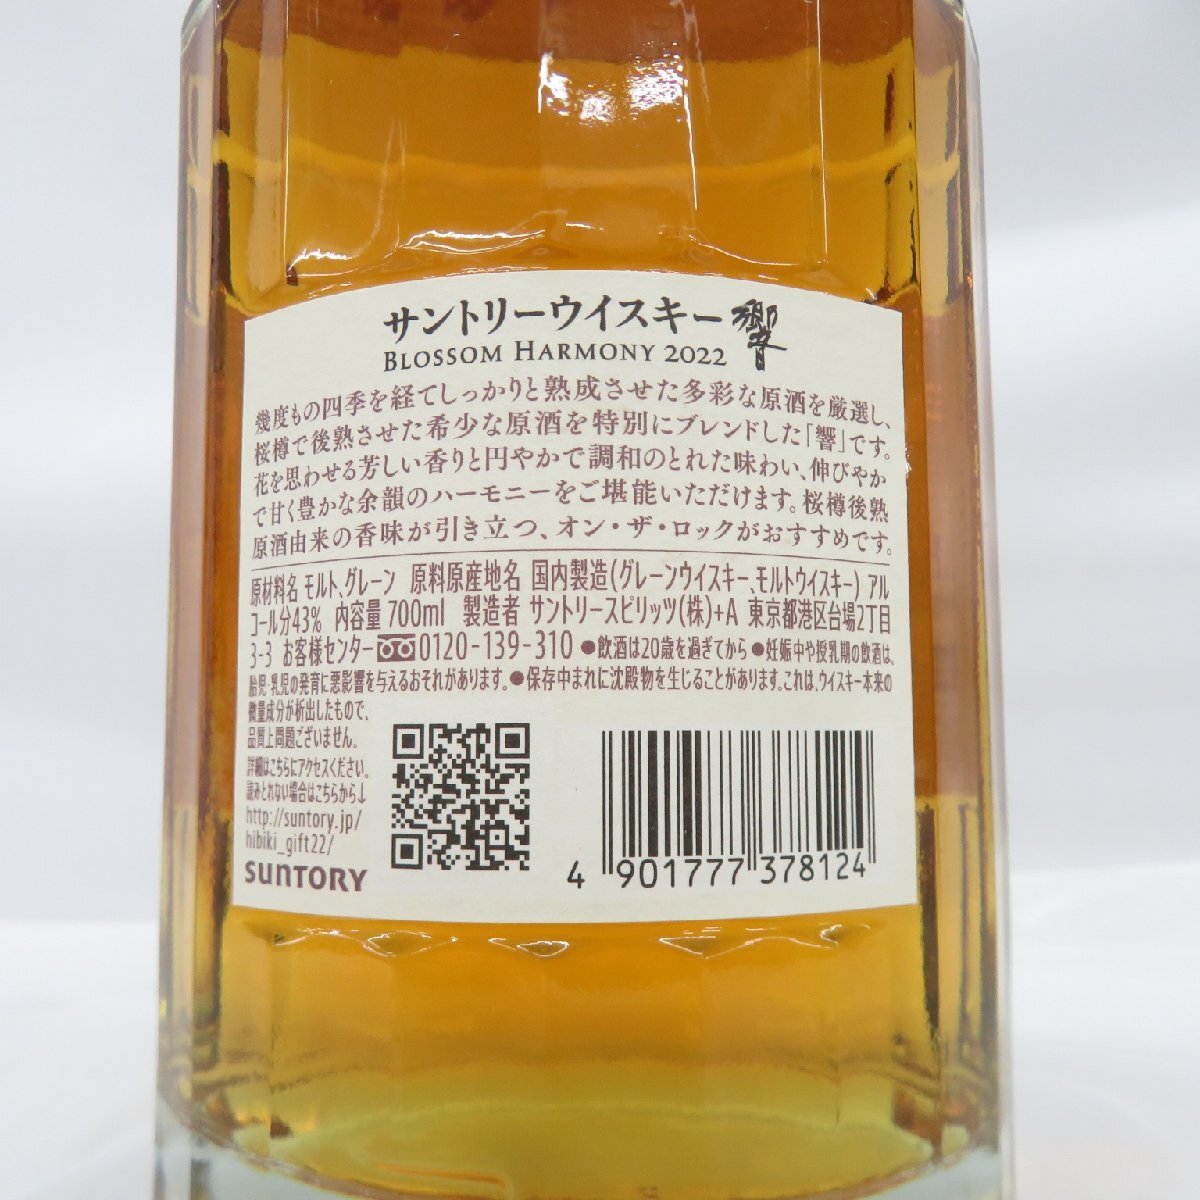 1 jpy ~[ not yet . plug ]SUNTORY Suntory .HIBIKIbro Sam is - moni -2022 whisky 700ml 43% box / booklet attaching 890111522 0509